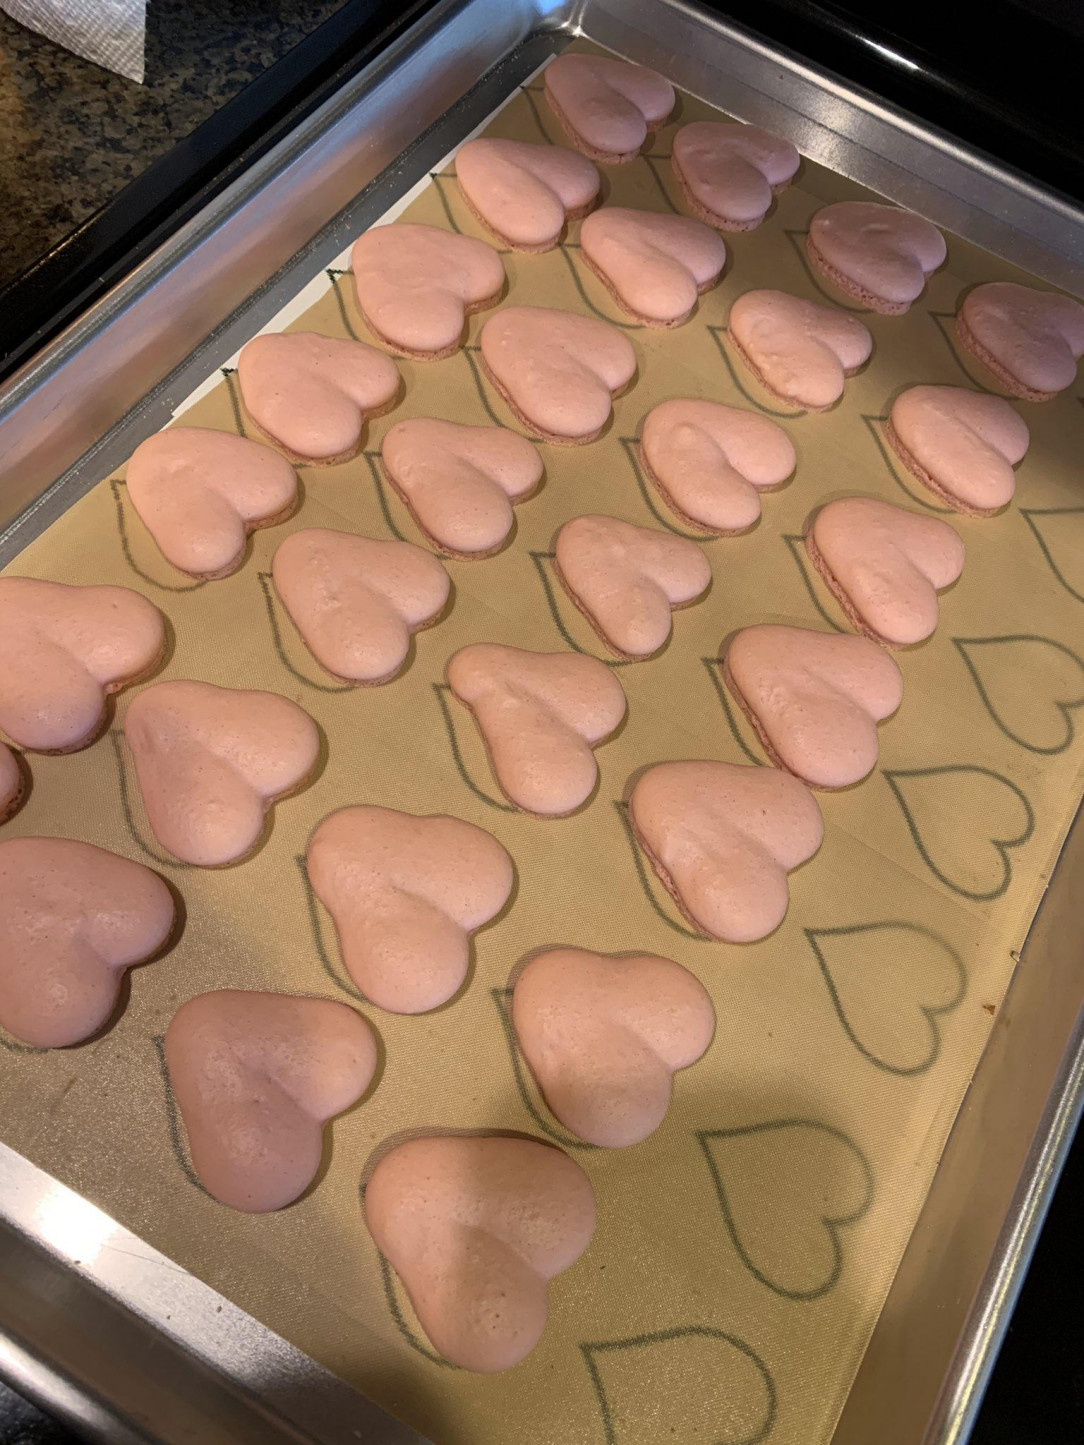 Heart or butt cookies 😬